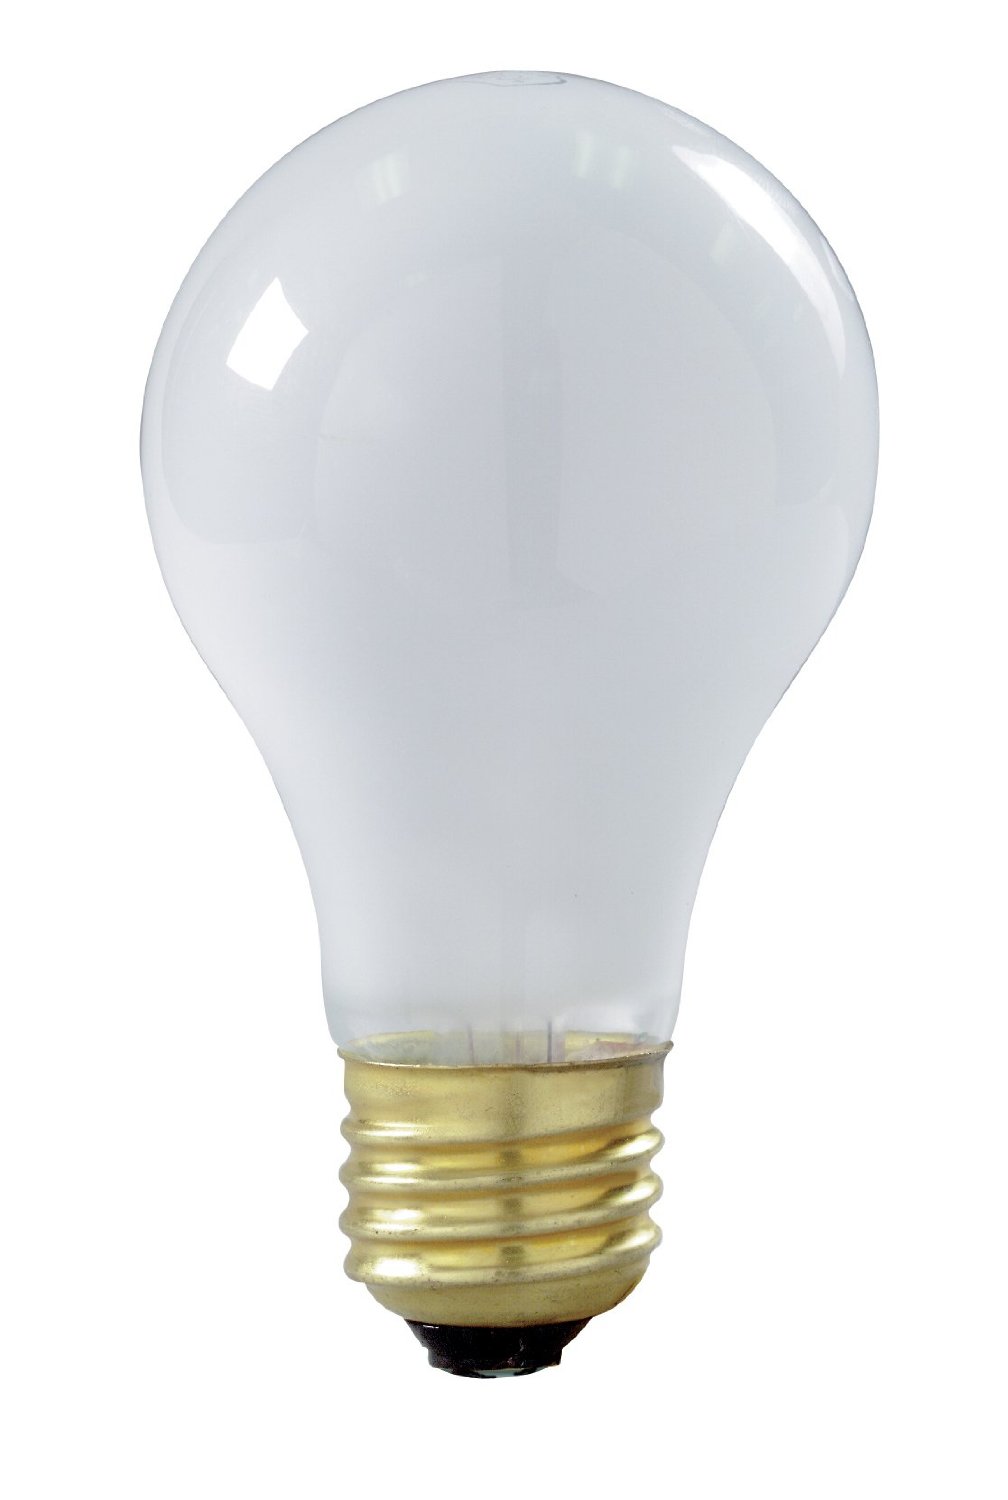 buy rough service light bulbs at cheap rate in bulk. wholesale & retail lighting parts & fixtures store. home décor ideas, maintenance, repair replacement parts